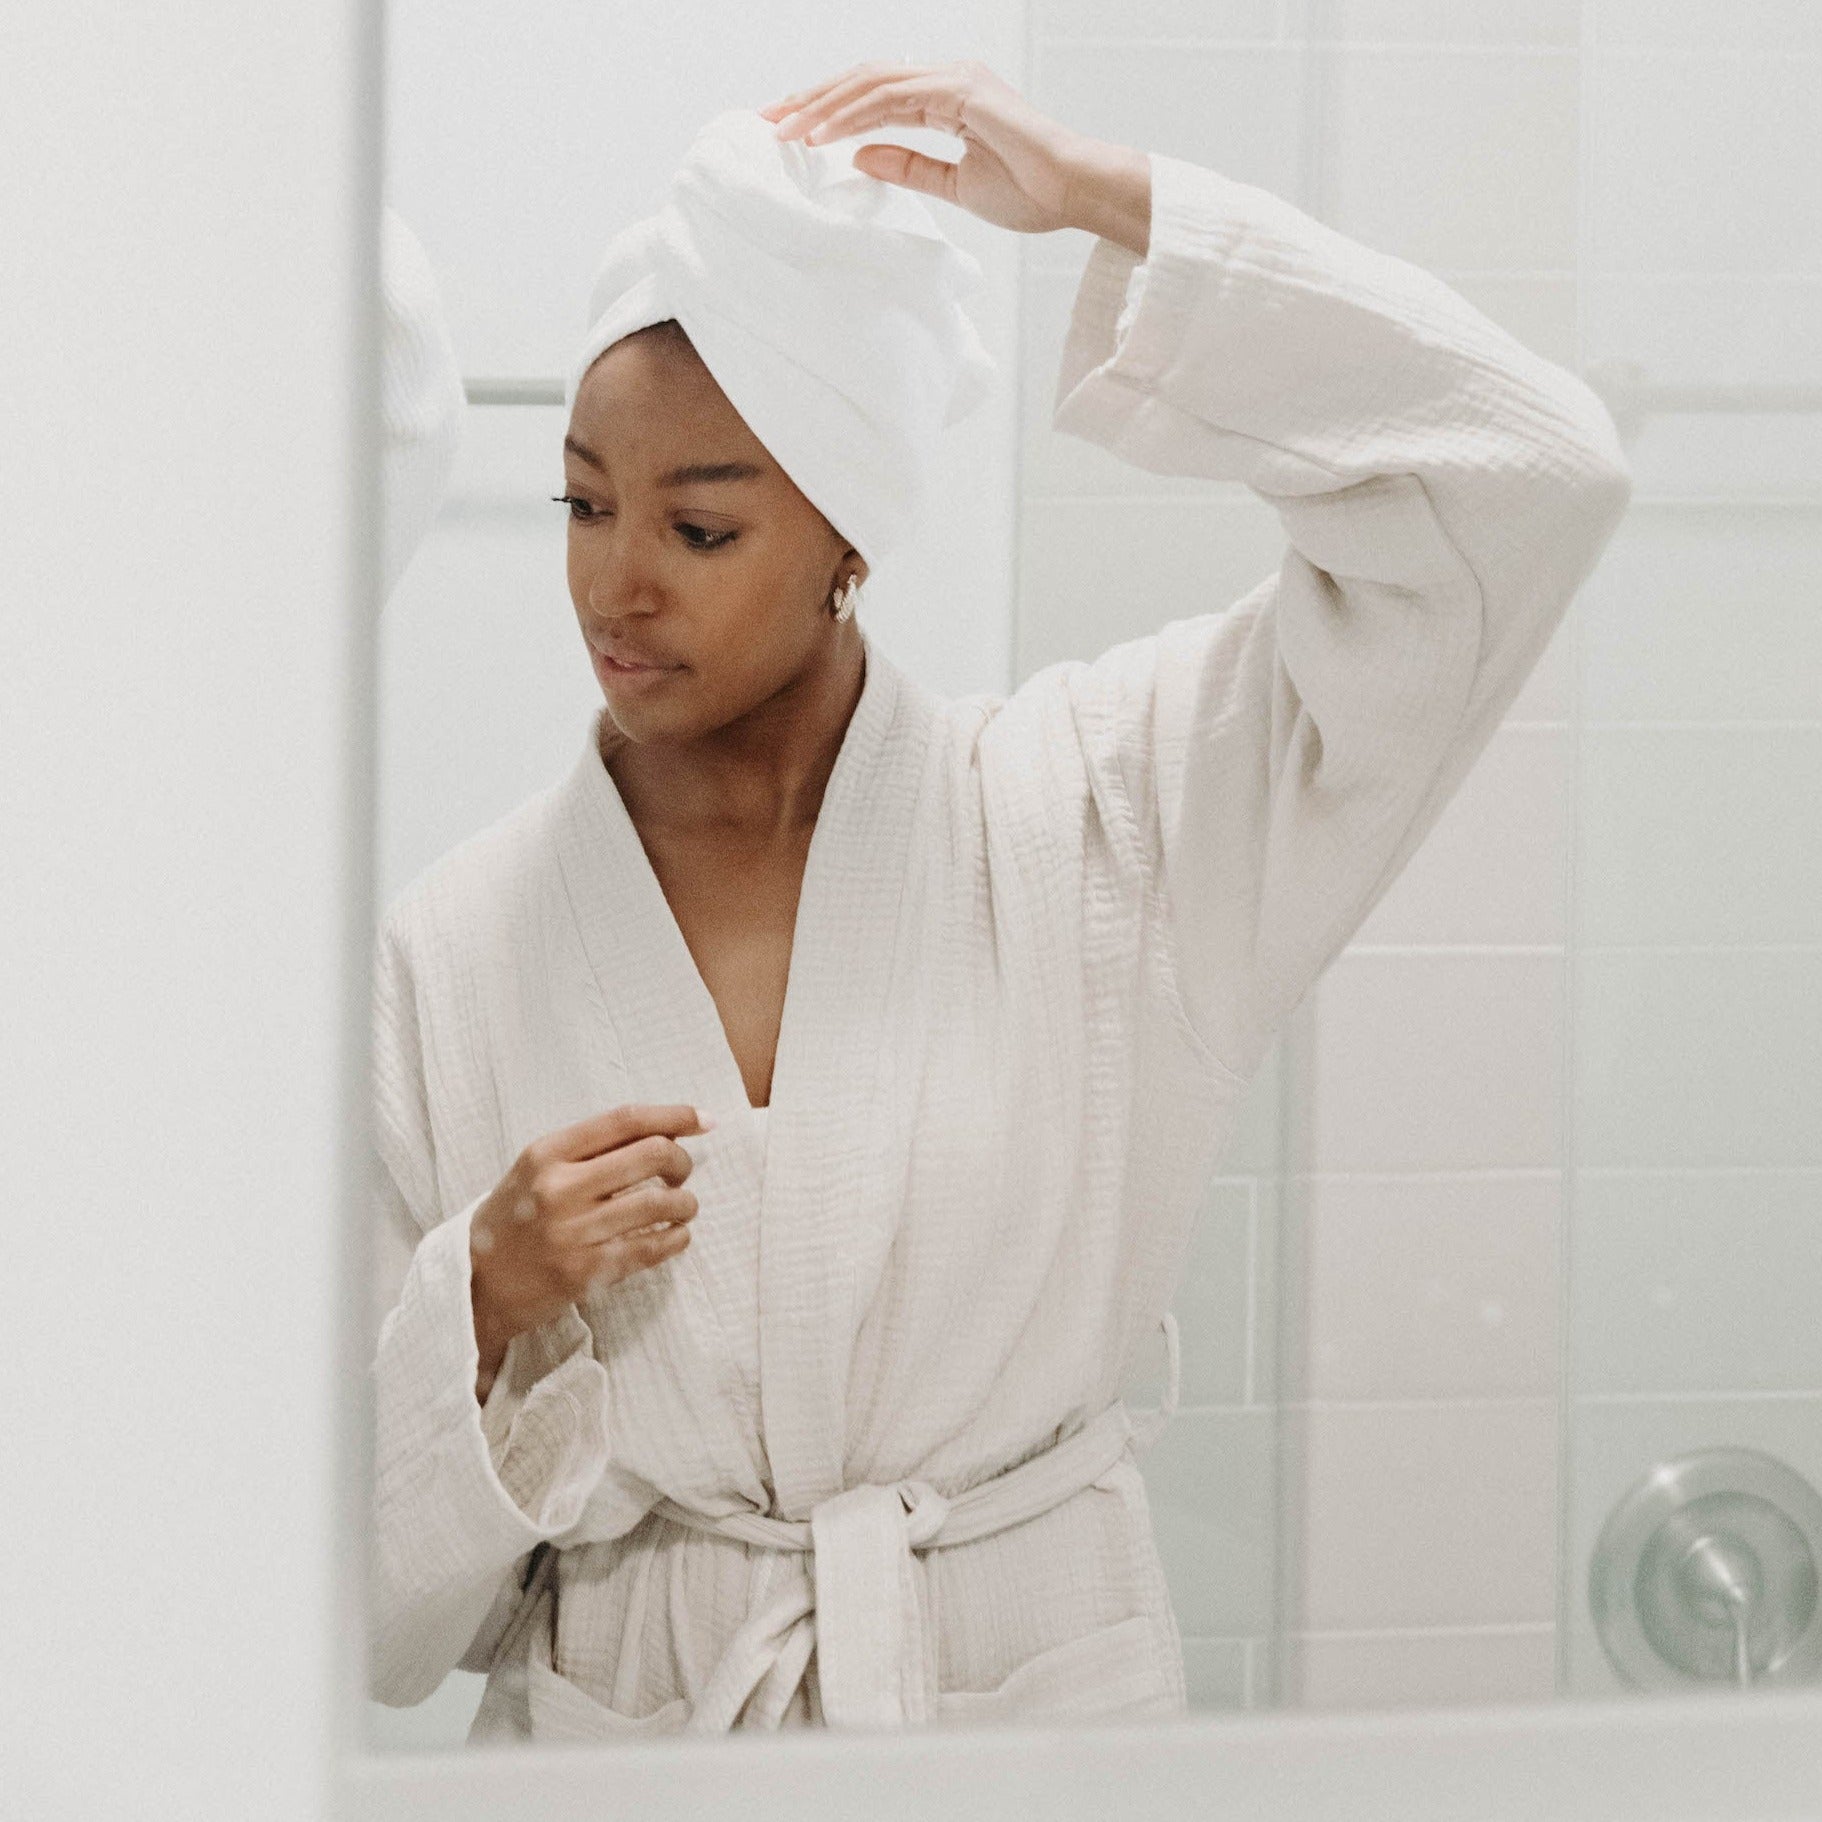 A girl standing in a bathroom mirror wearing a muslin cloud oatmeal robe with a better hair days ahead hair towel in her hair.